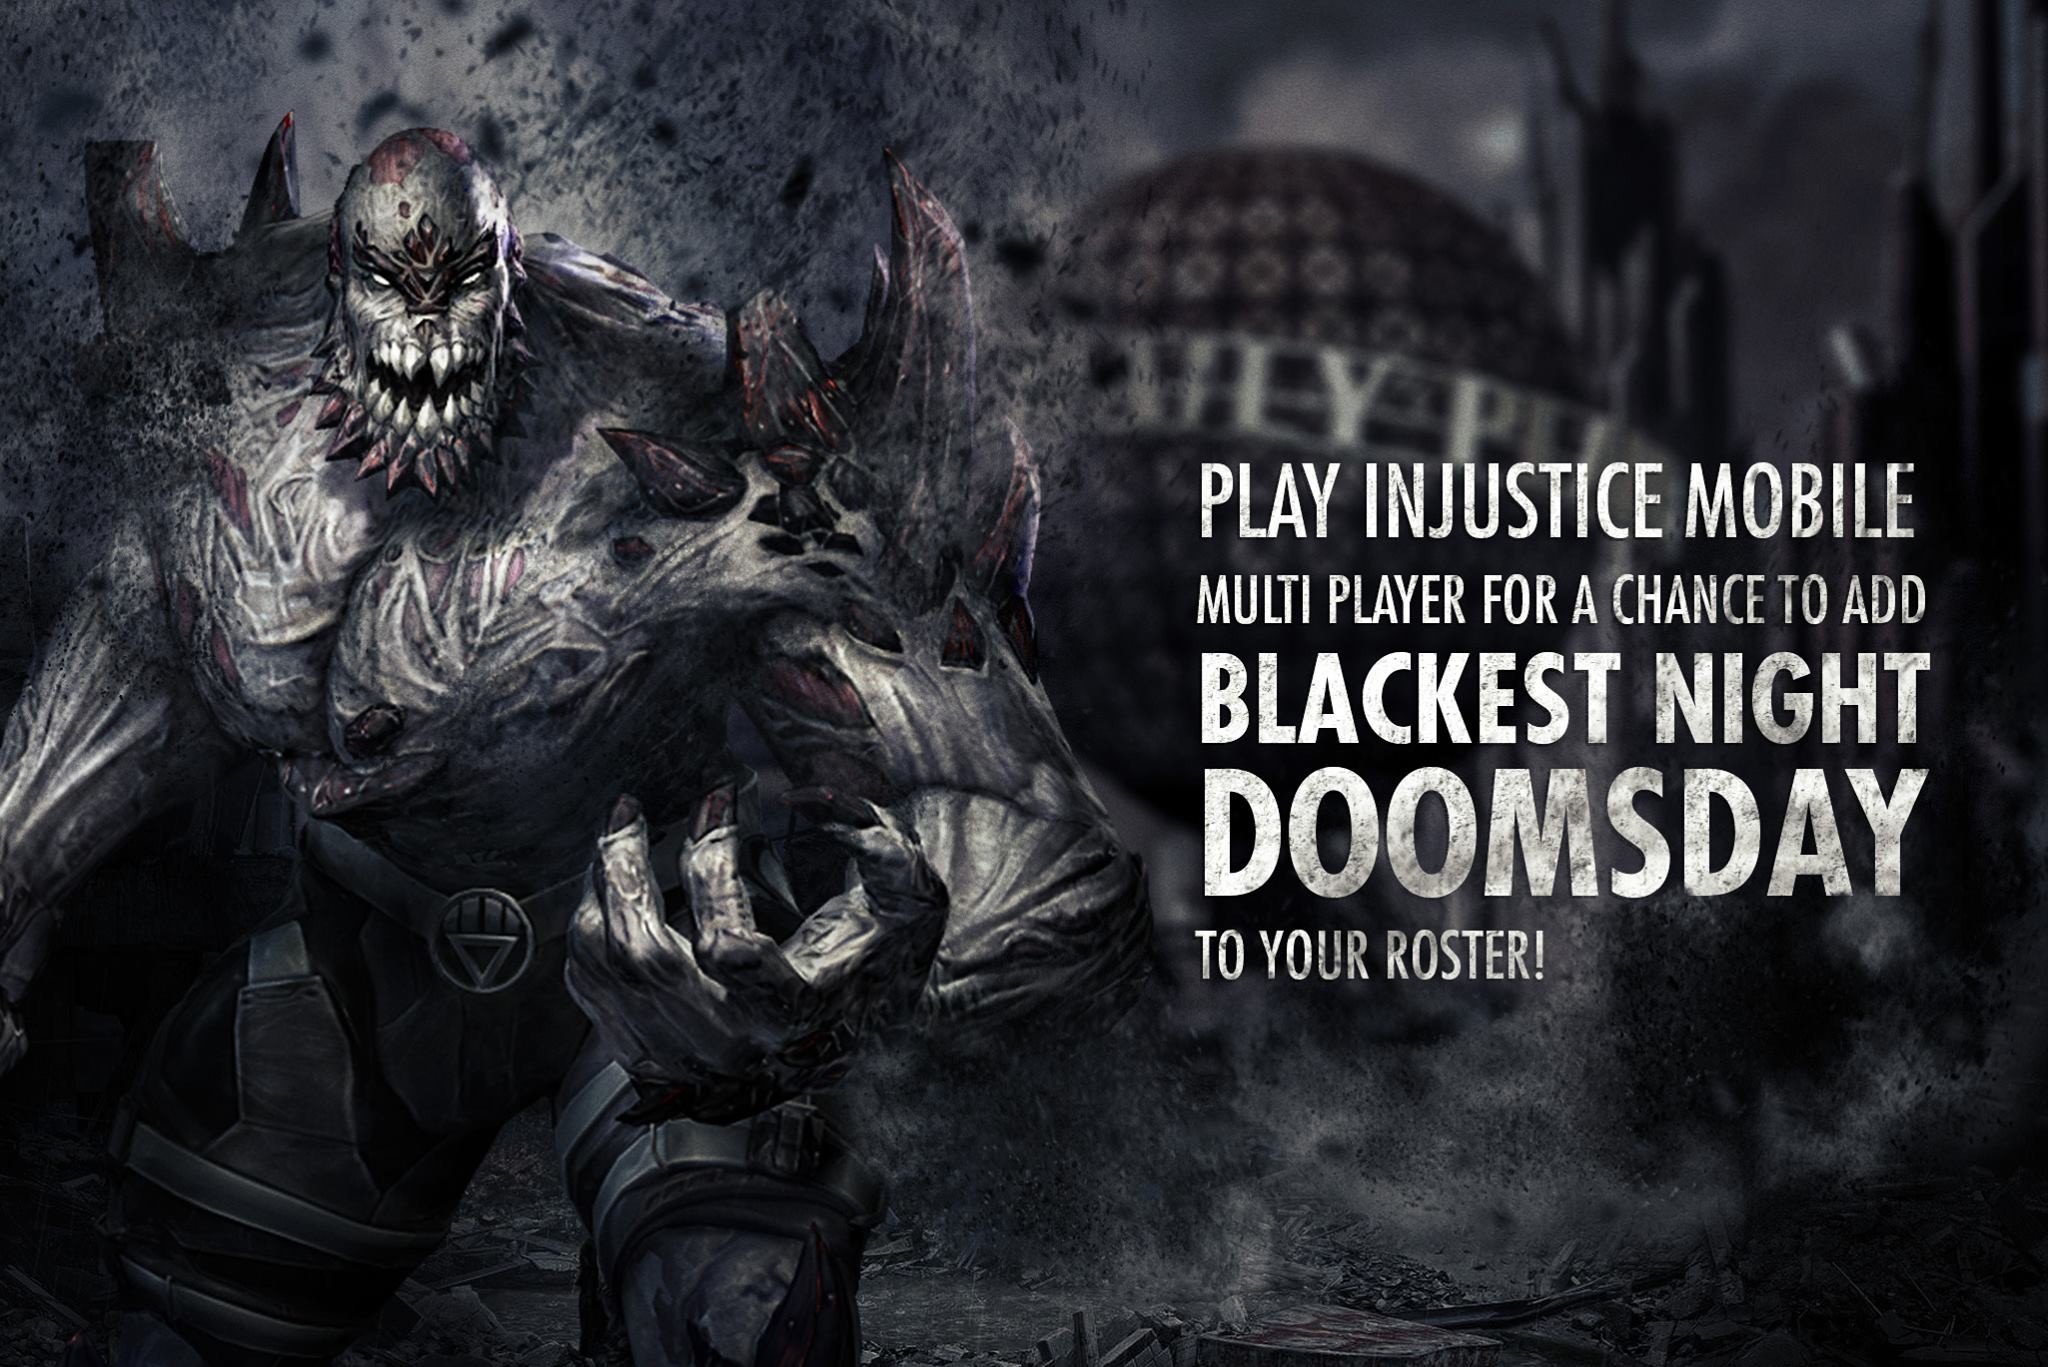 2048x1367 Blackest Night Doomsday Multiplayer Challenge For Injustice Mobile |  Injustice Online